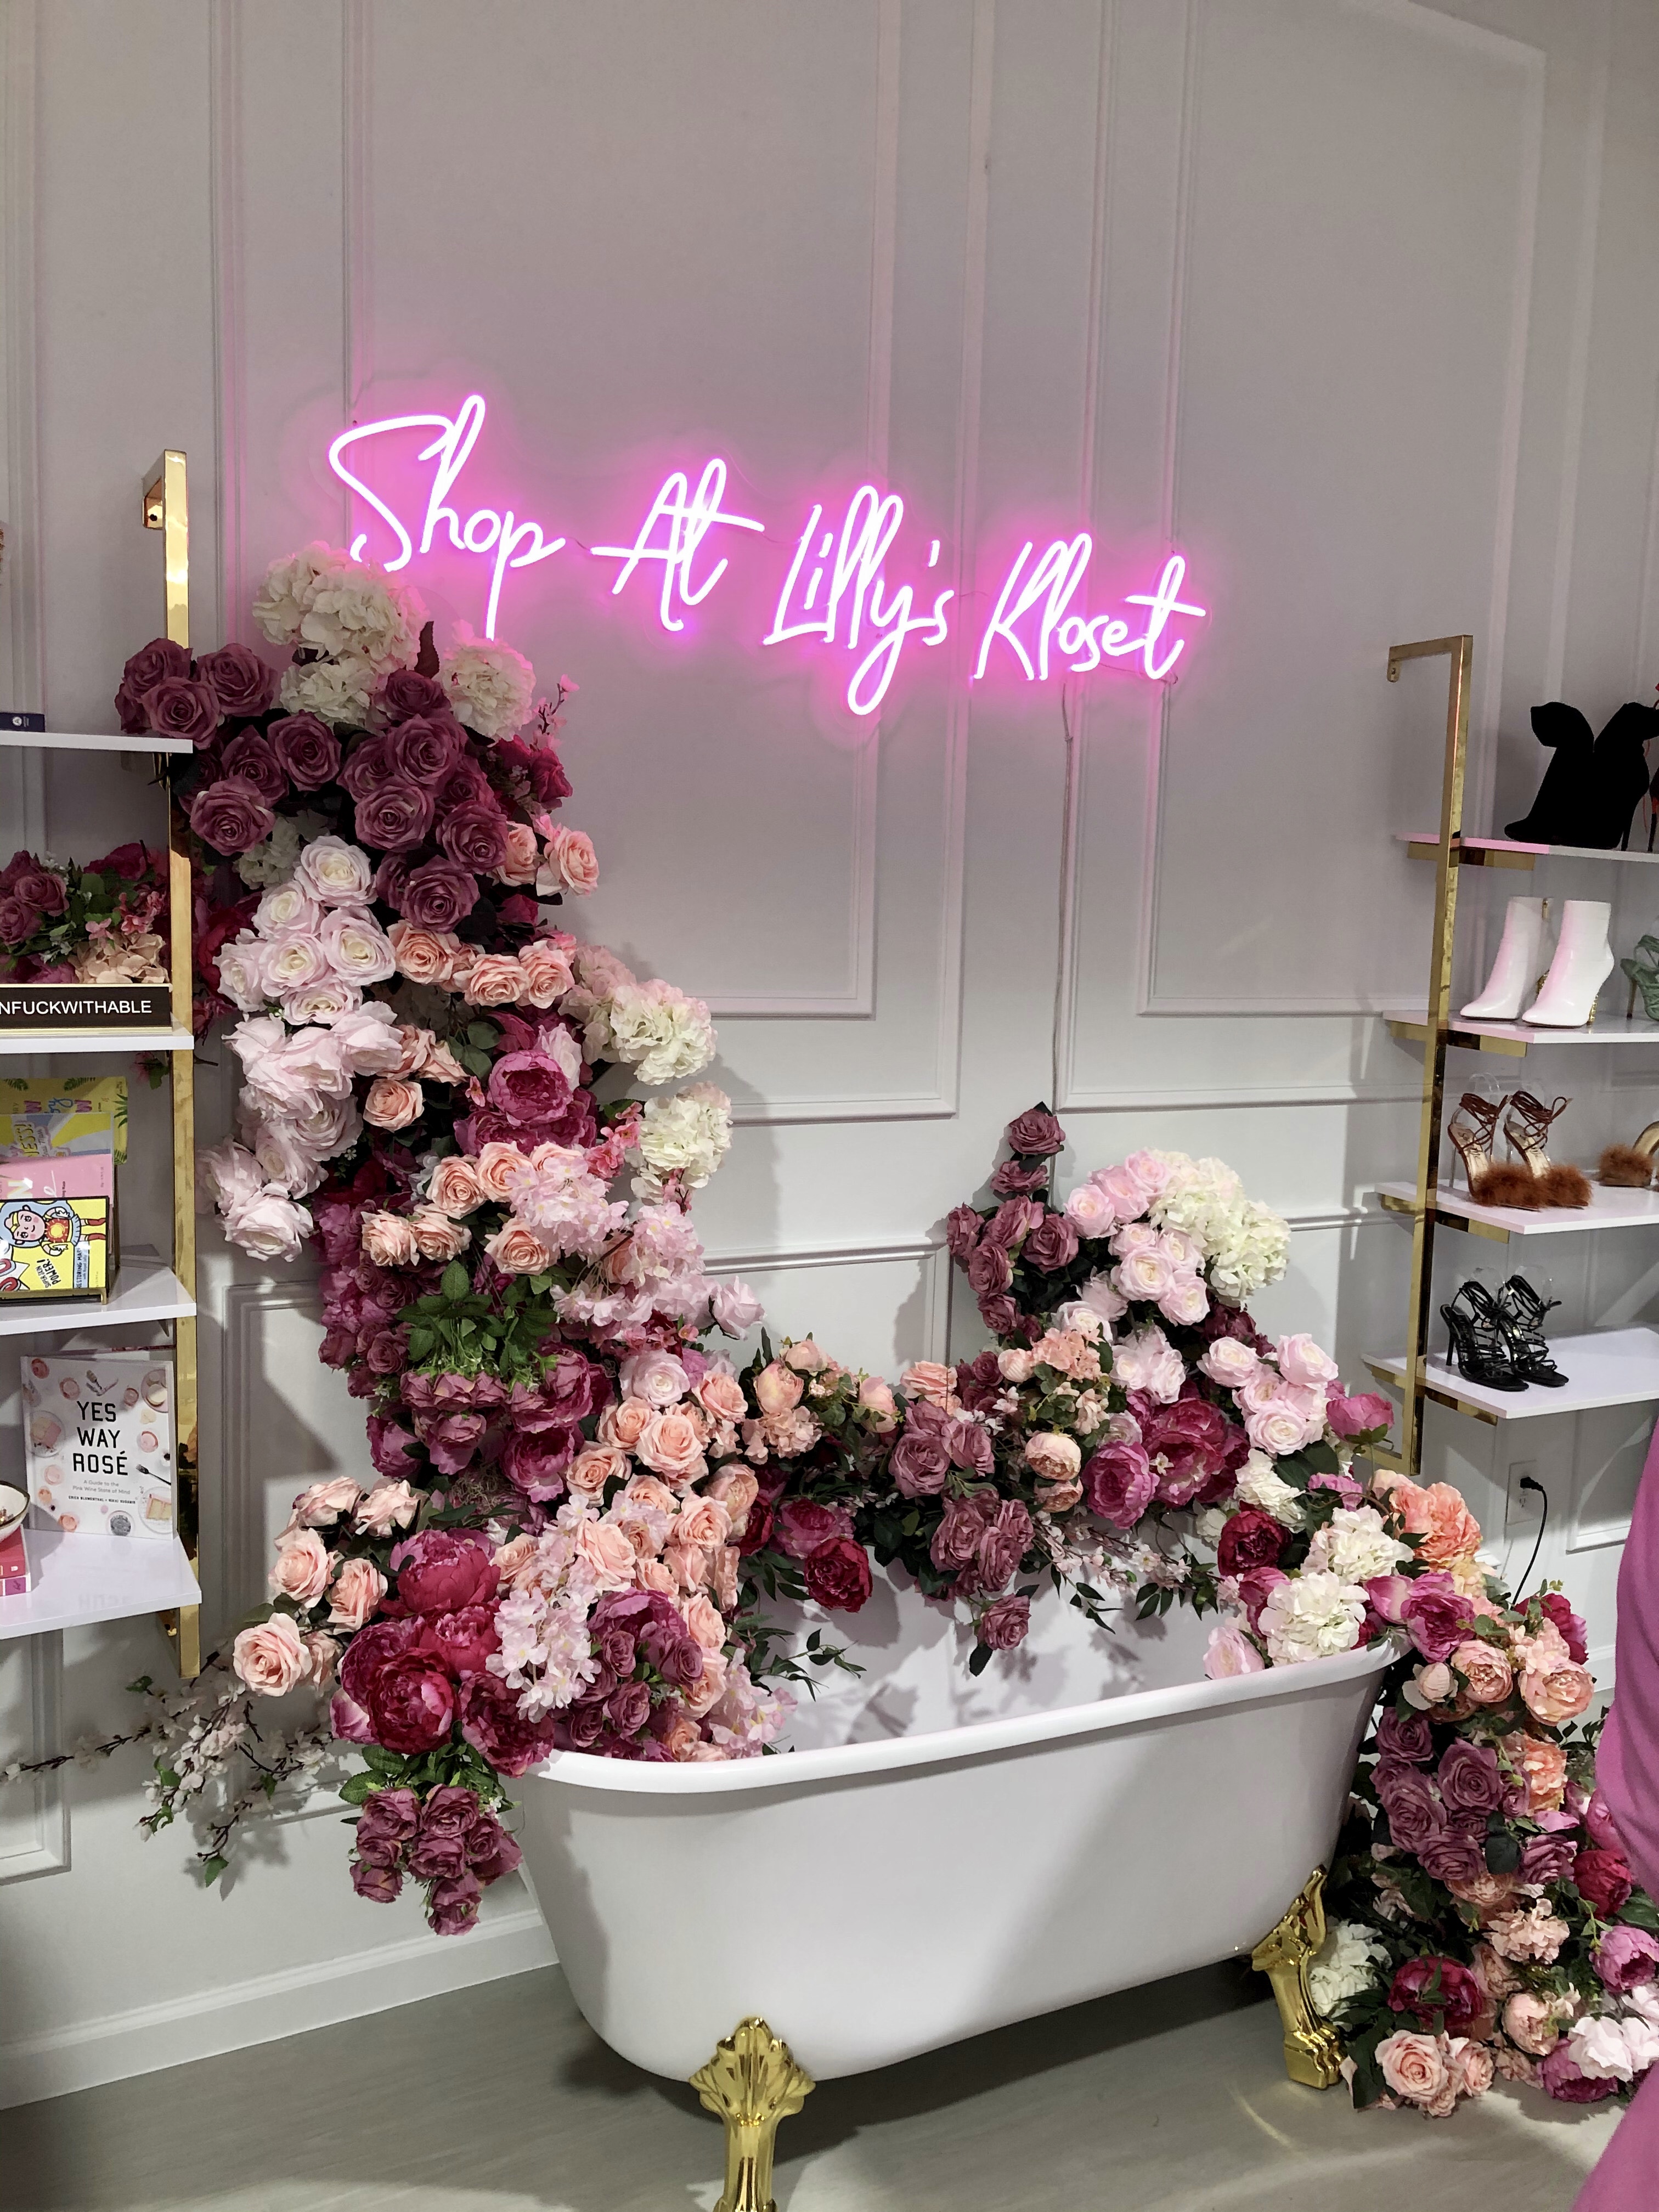 Lilly's Kloset  Houston Boutique (@lillyskloset) • Instagram photos and  videos